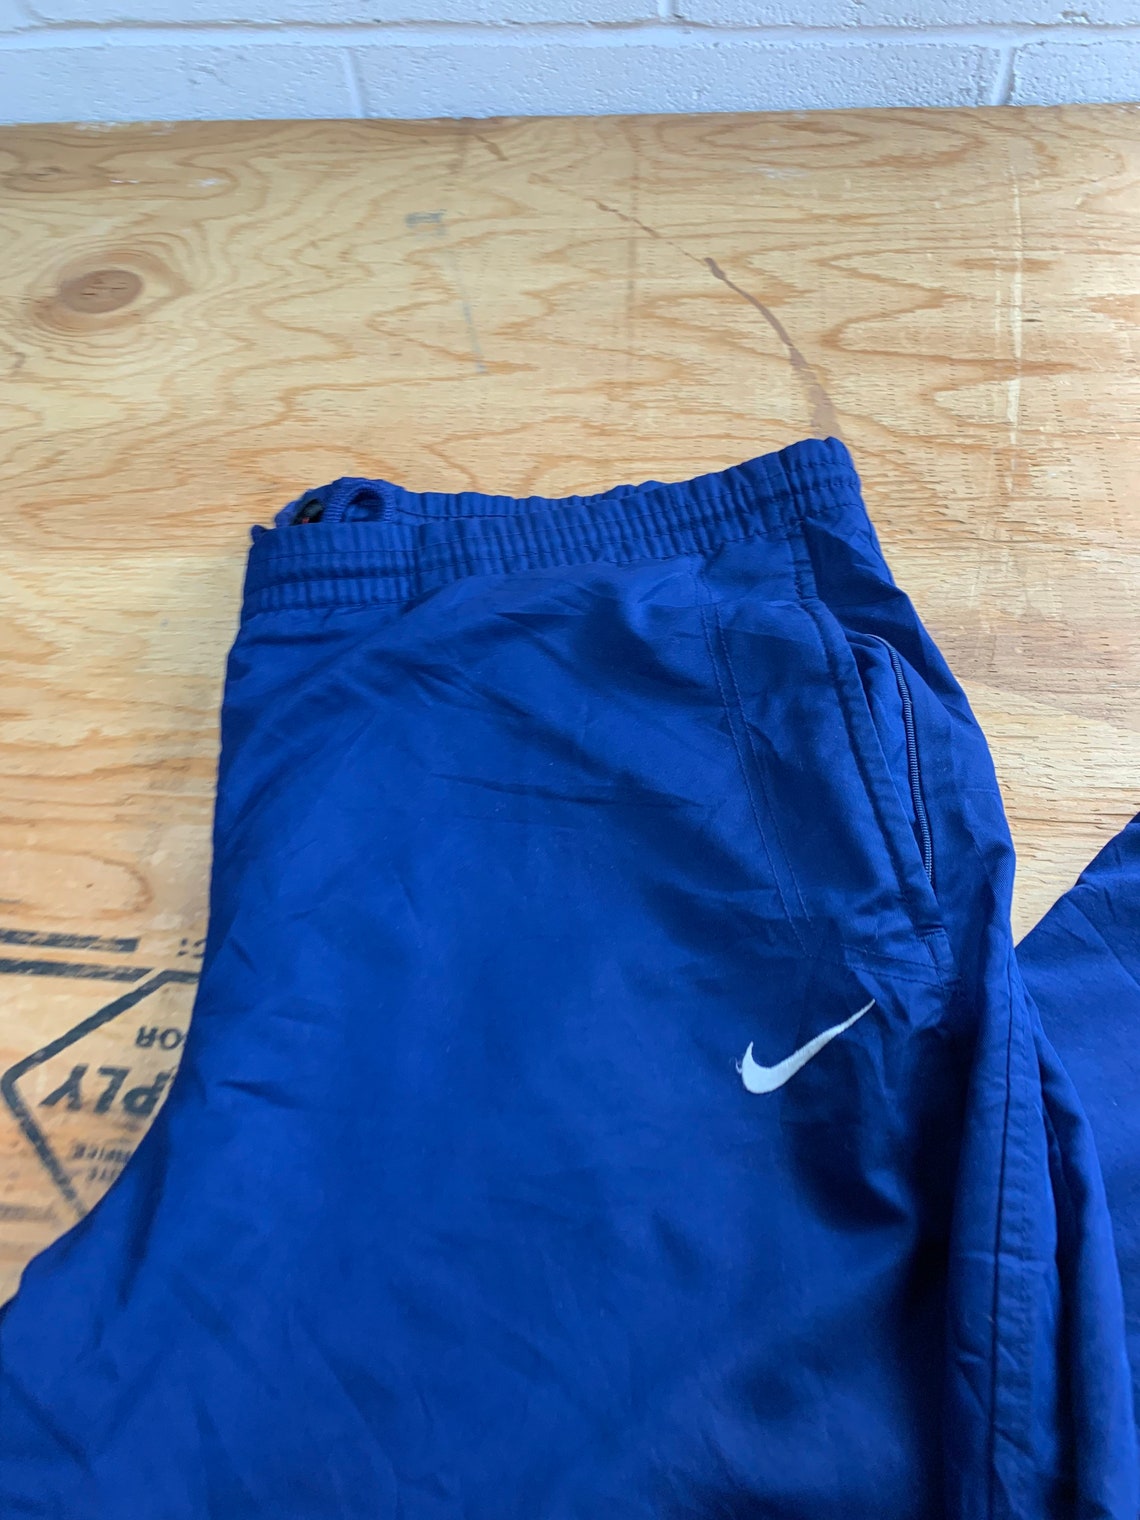 Vintage Nike Swoosh Tracksuit Pants / Trousers / Bottoms / | Etsy